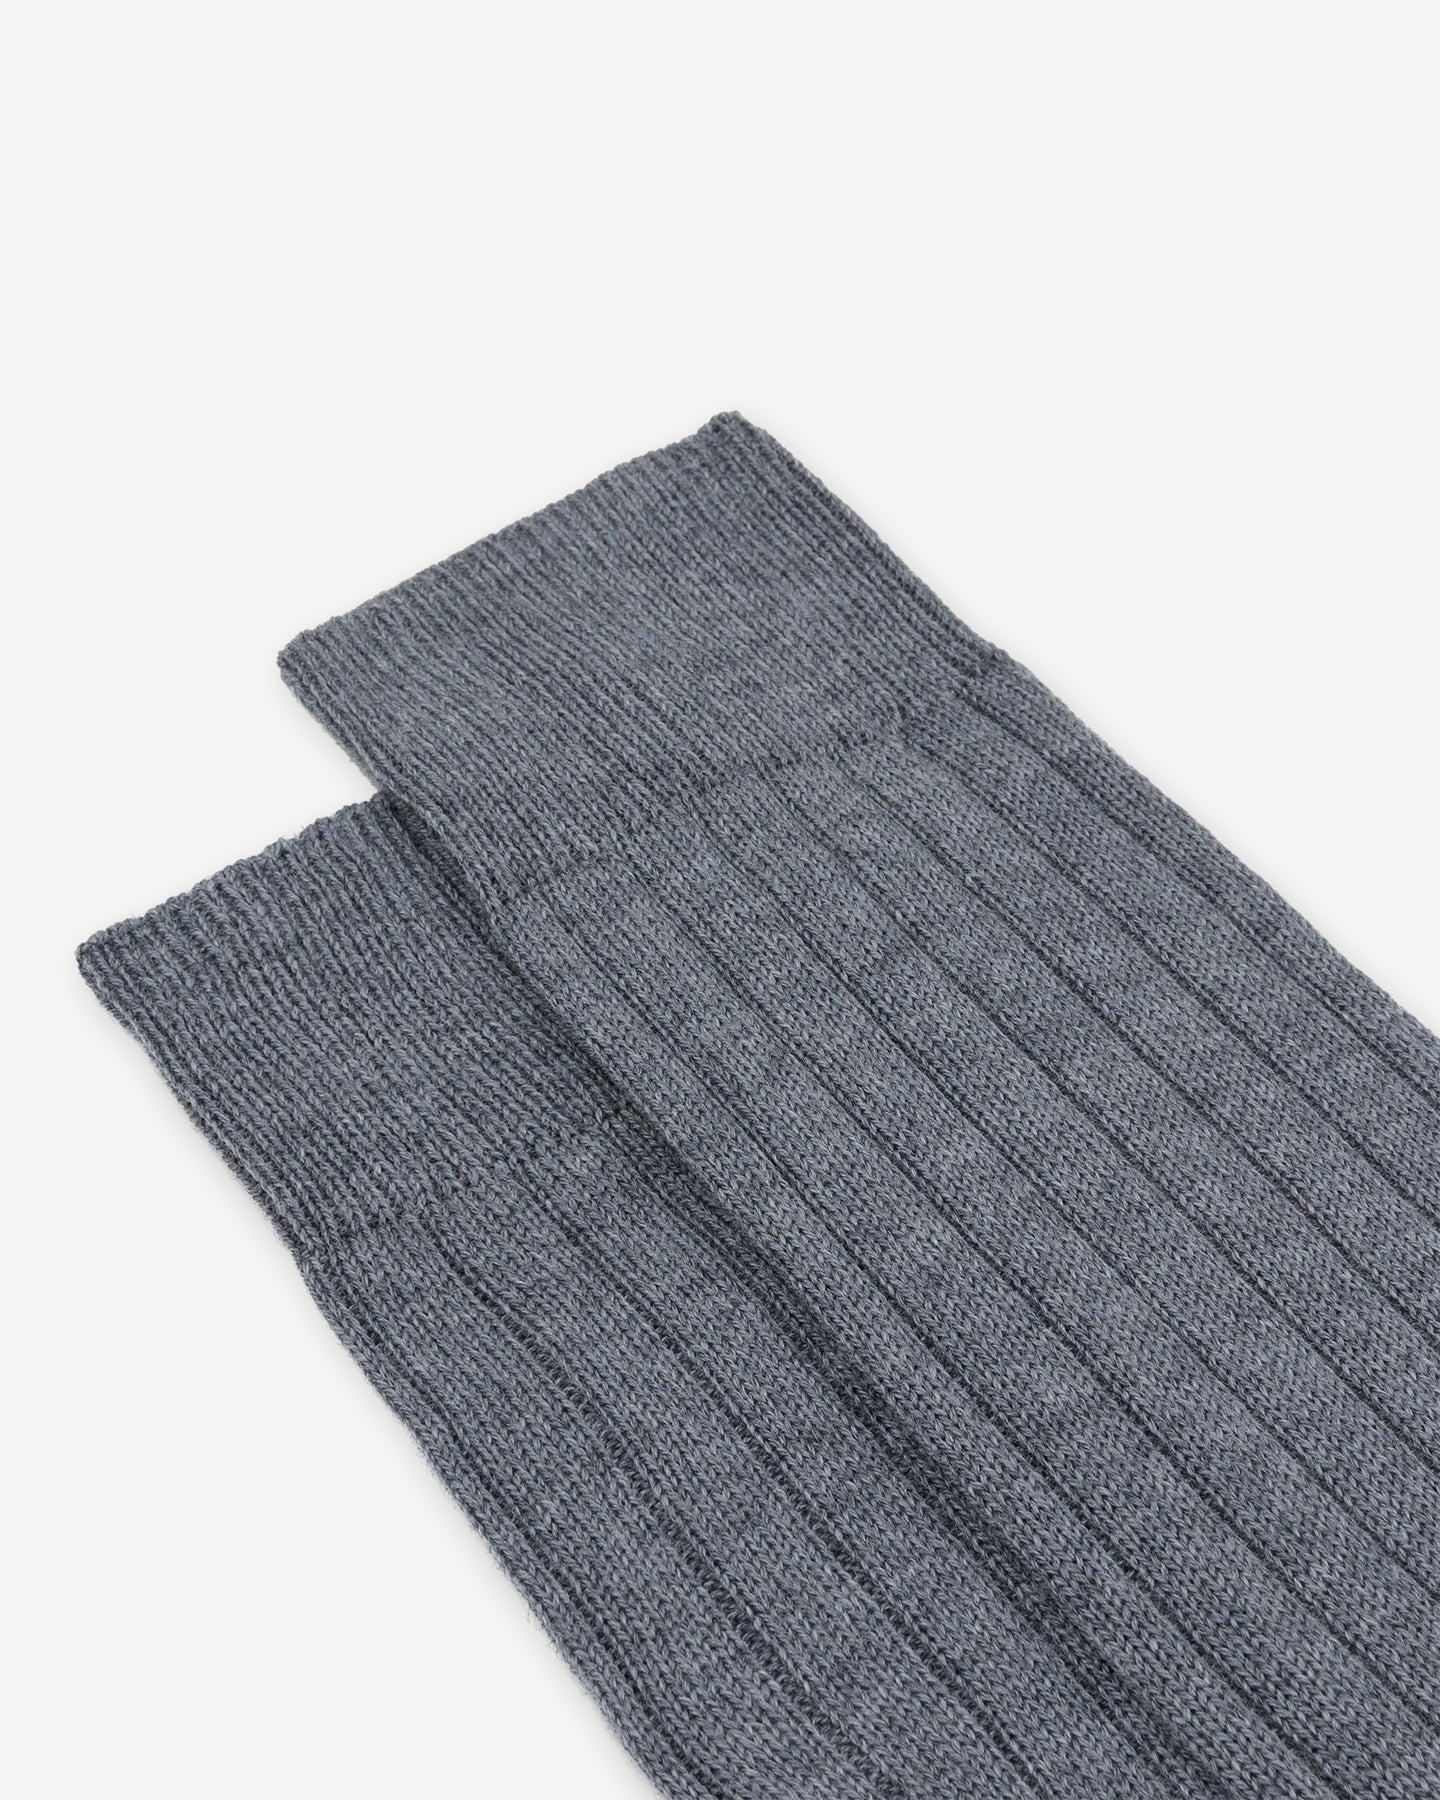 Light grey wide rib socks made from Australian merino wool